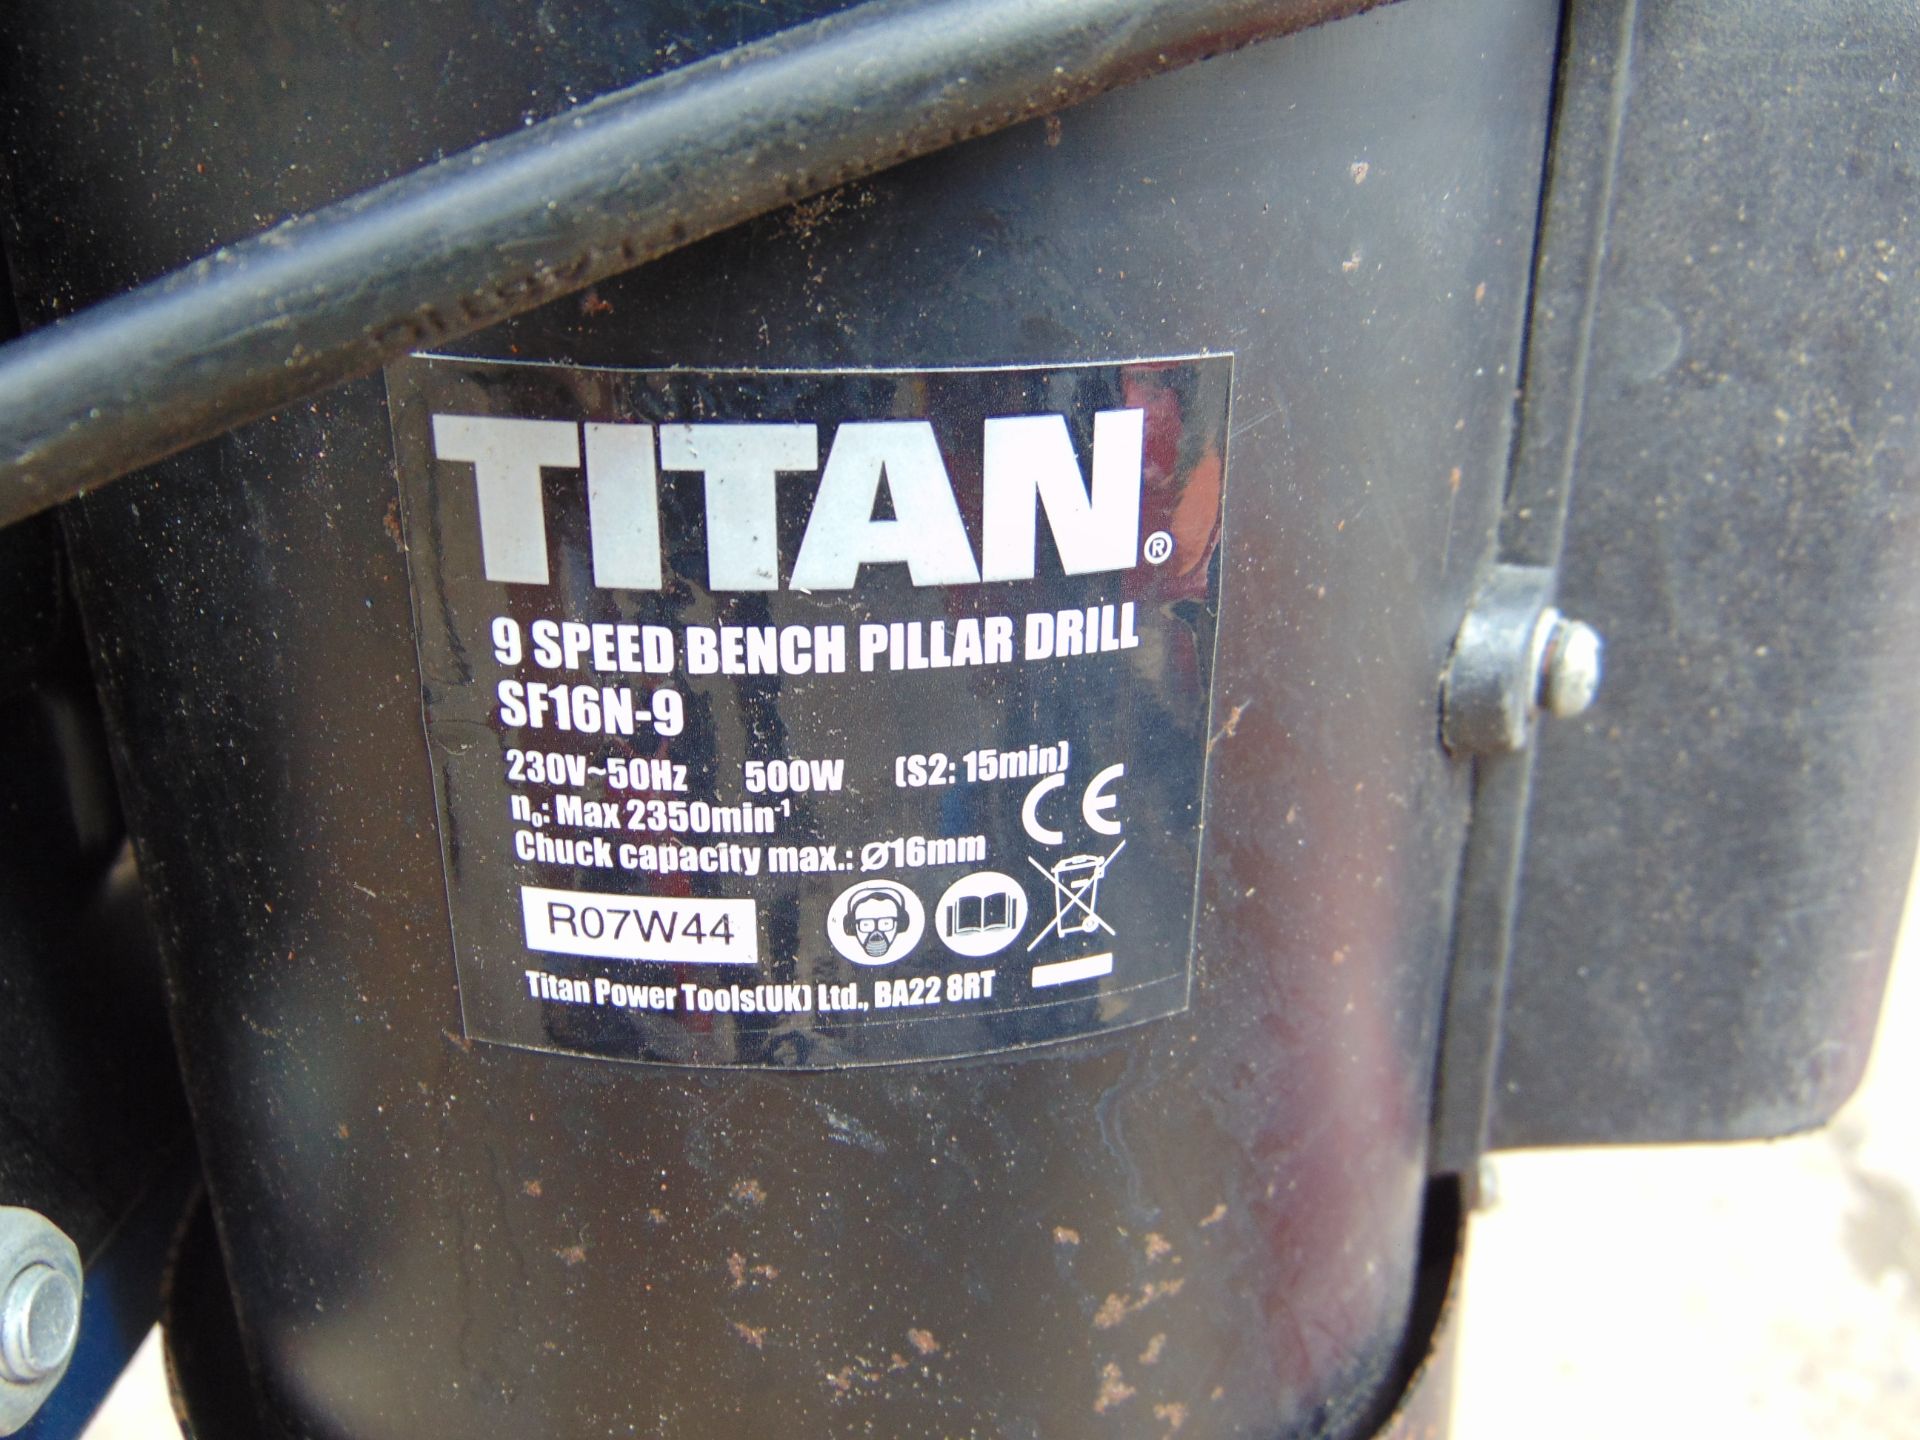 Titan 9 Speed Bench Pillar Drill - Image 5 of 5